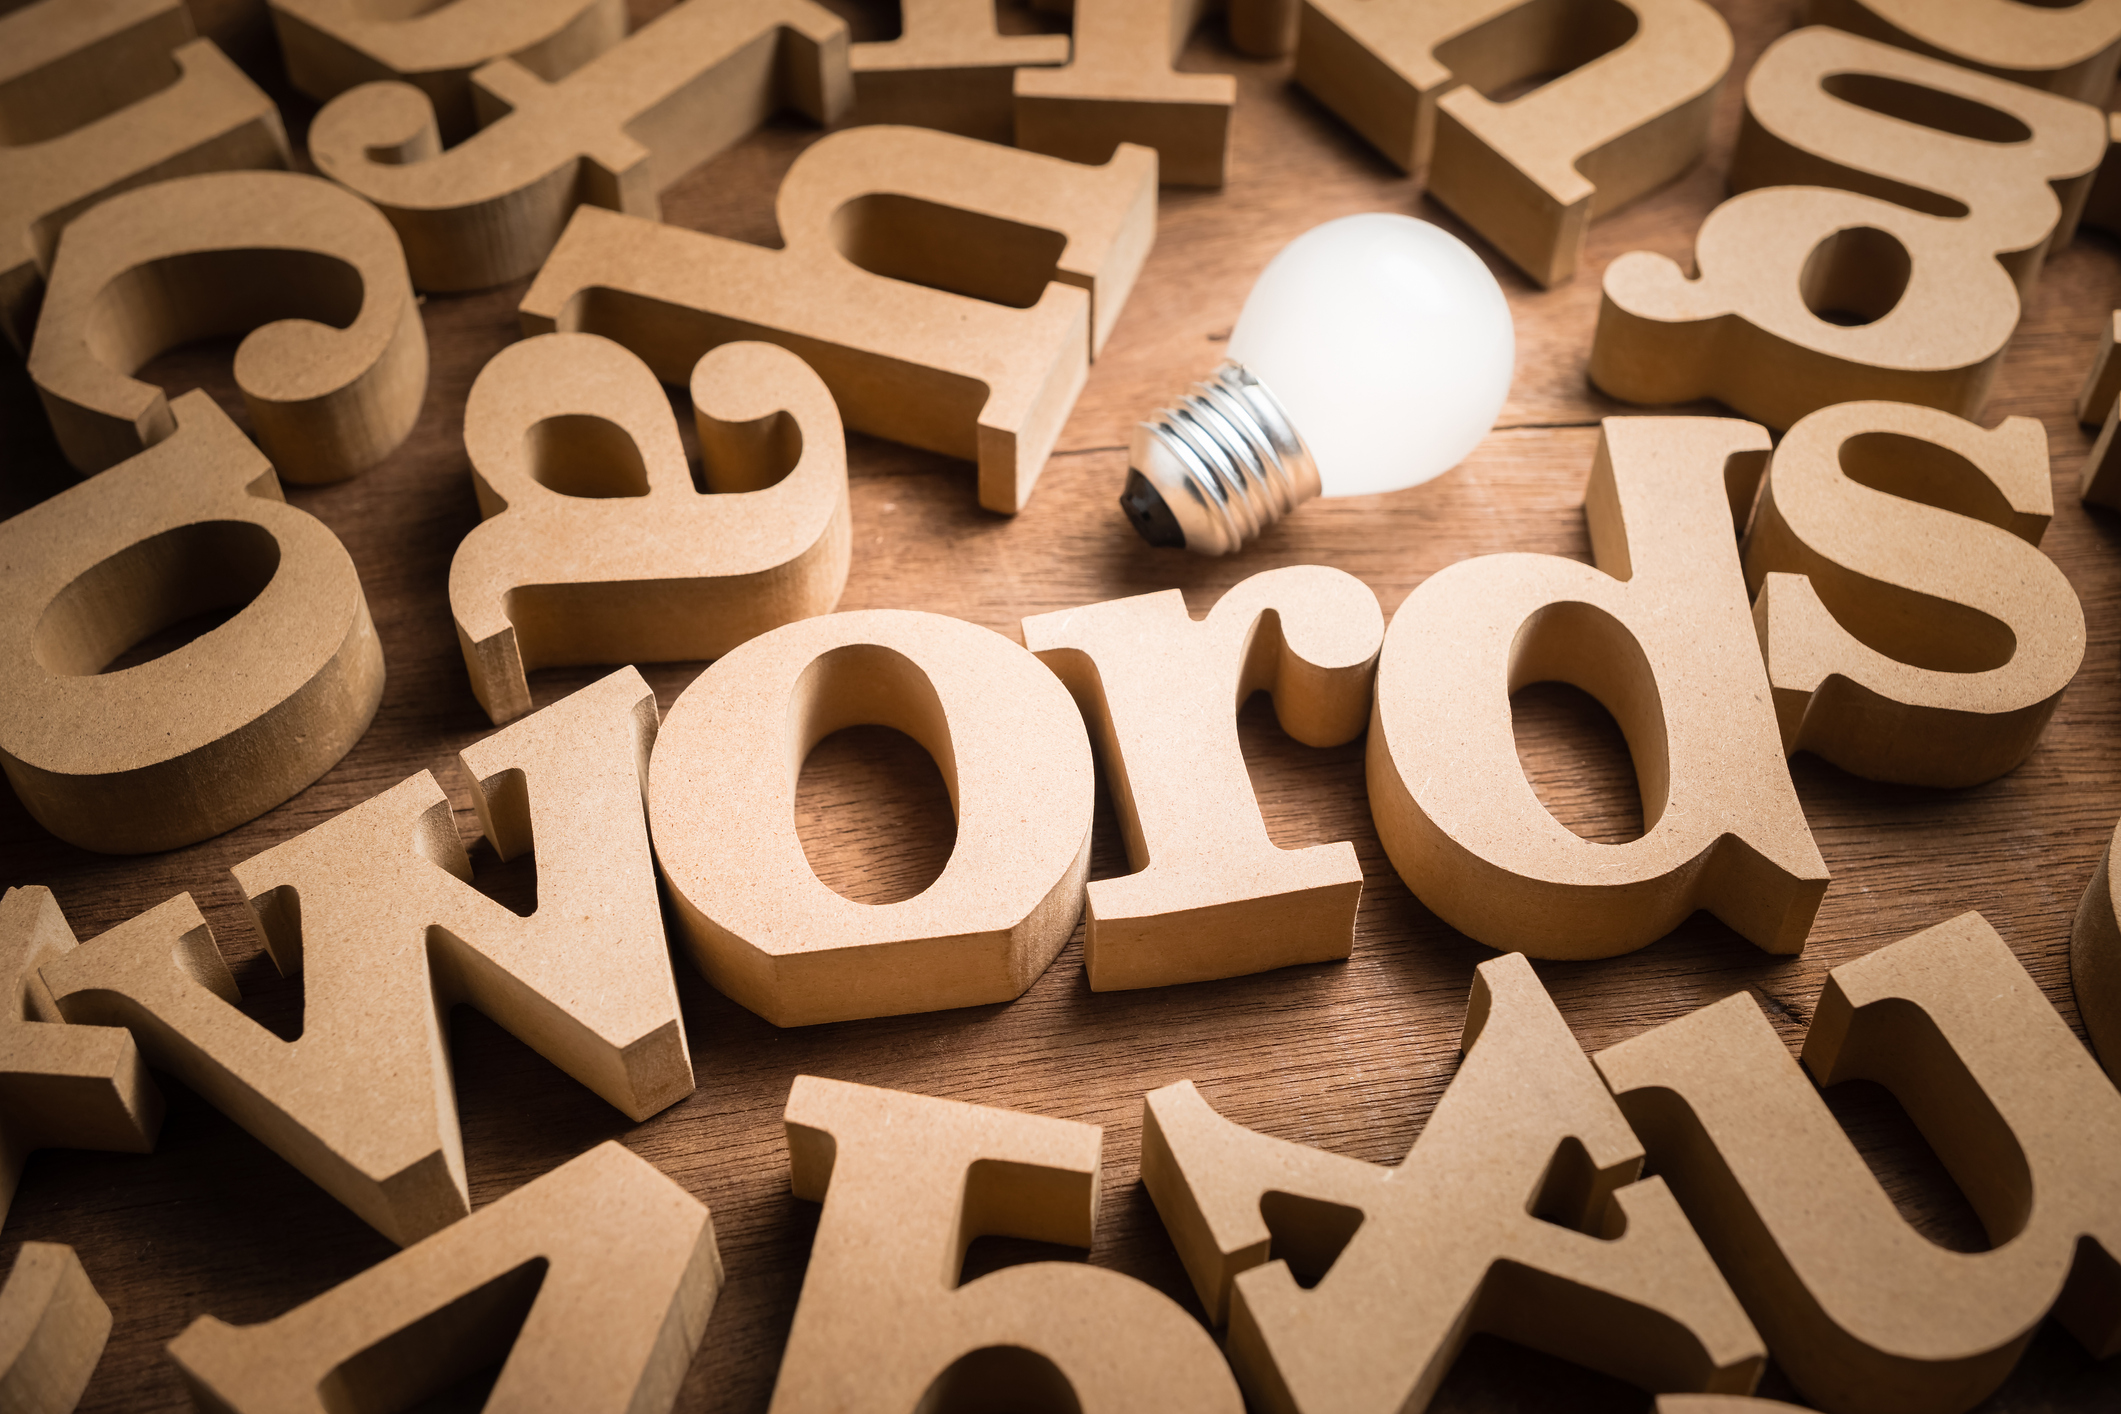 'Words' spelled out beside a lightbulb